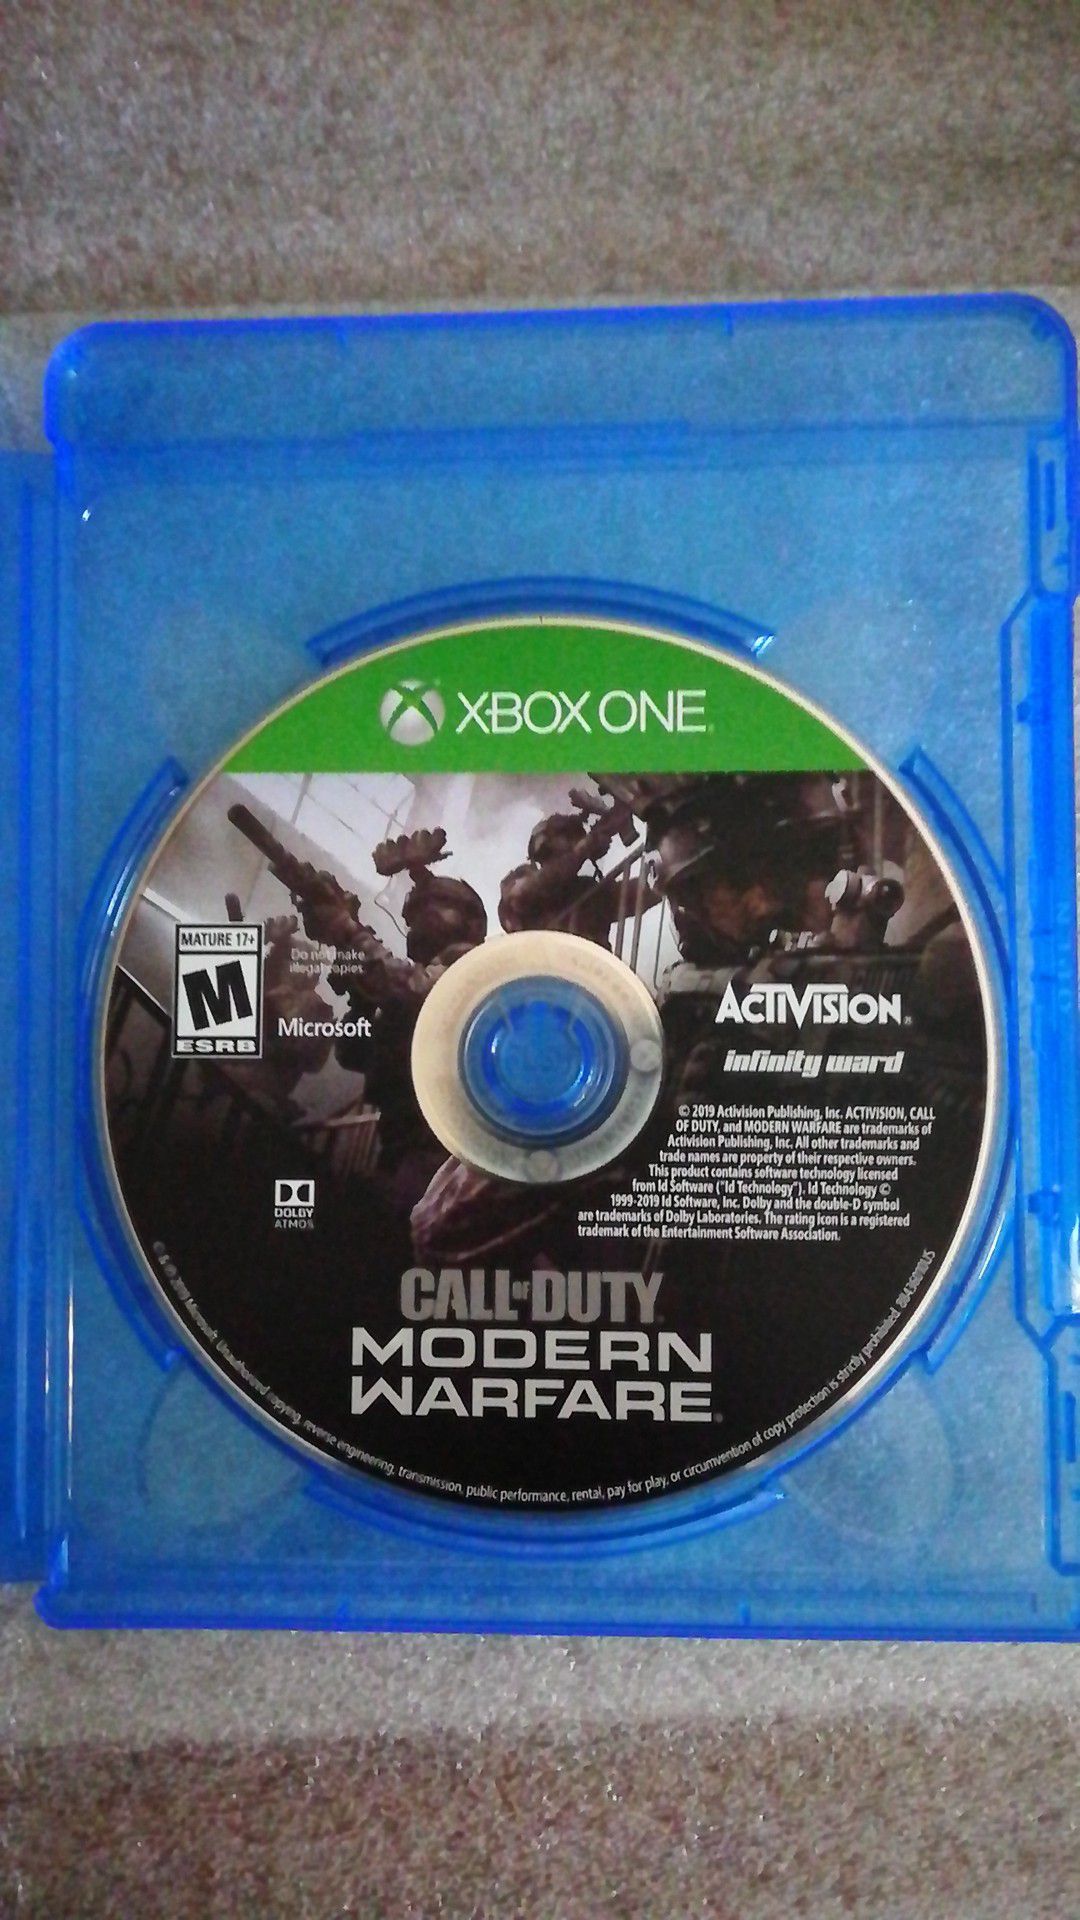 Xbox One Modern Warfare game